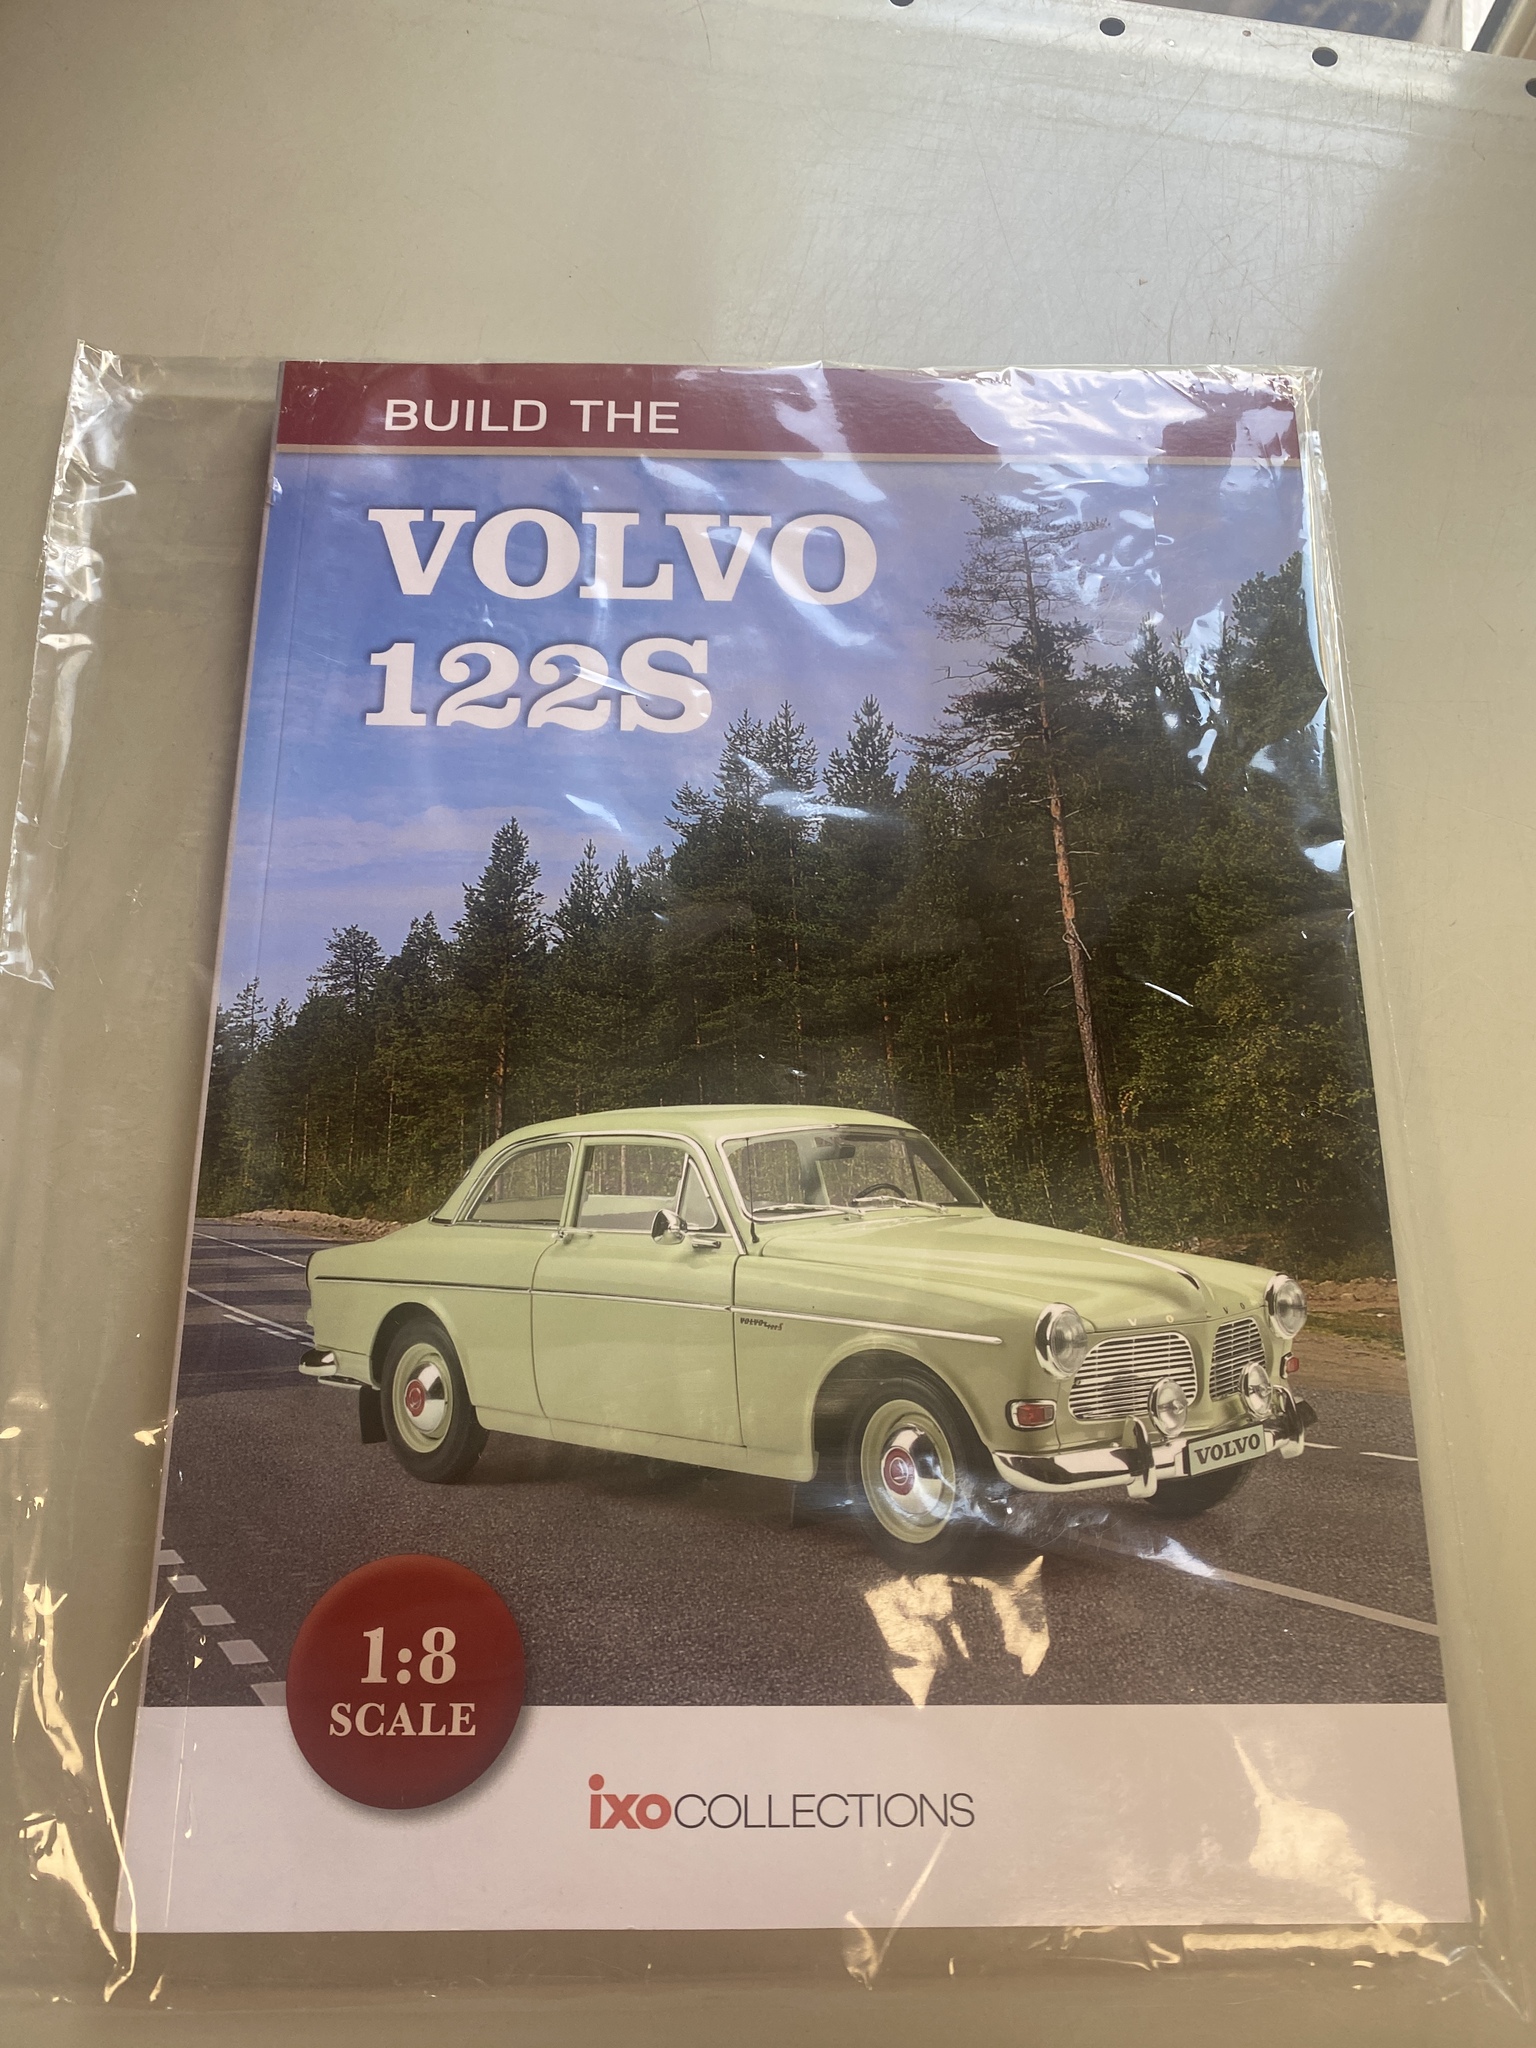 Skala 1/8 Volvo 122S Amazon i metall, m belysning, m.m. från Ixo Collections